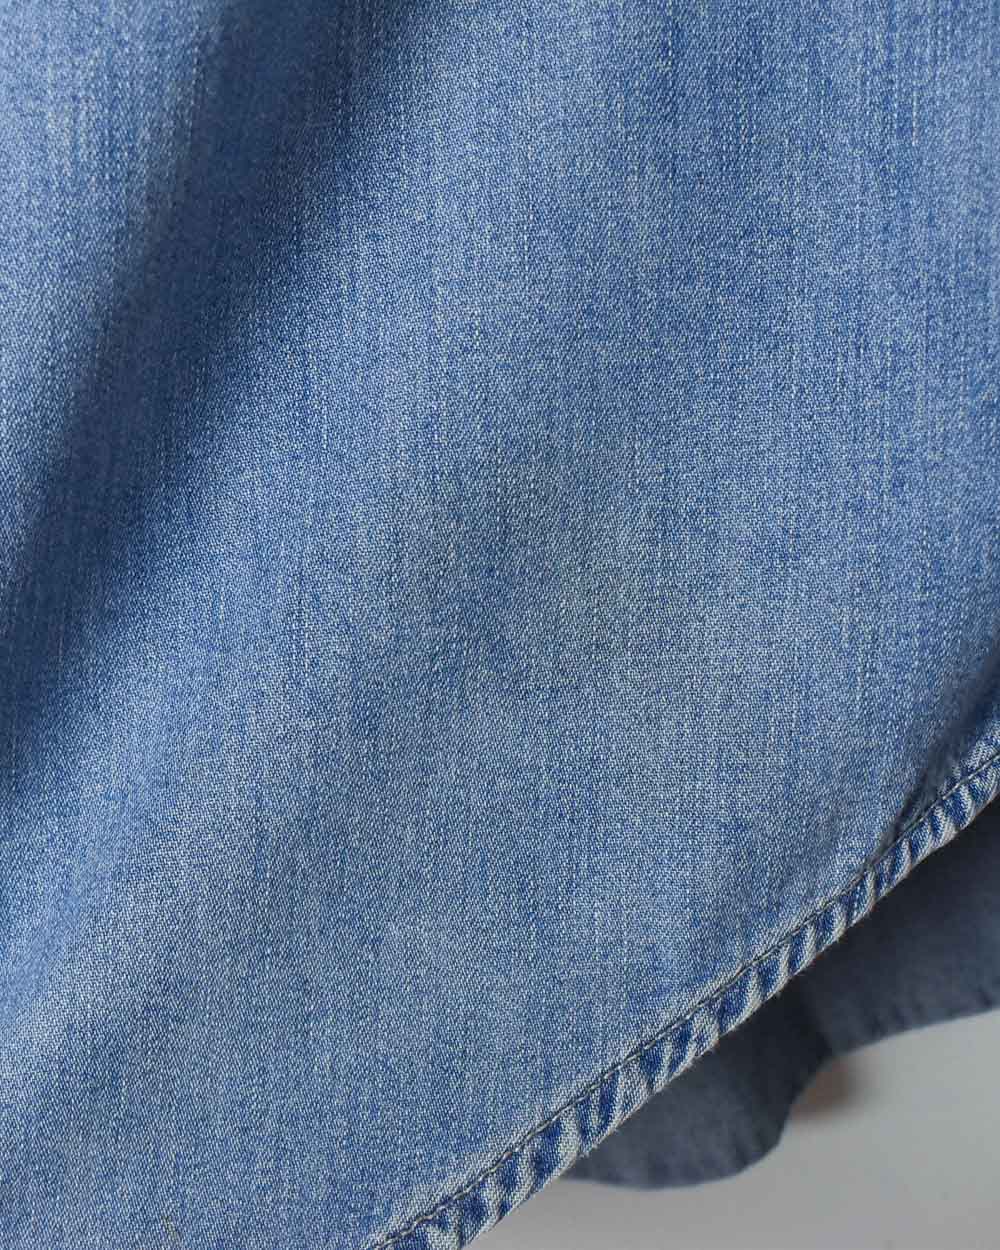 Blue Levi's Denim Shirt - Large